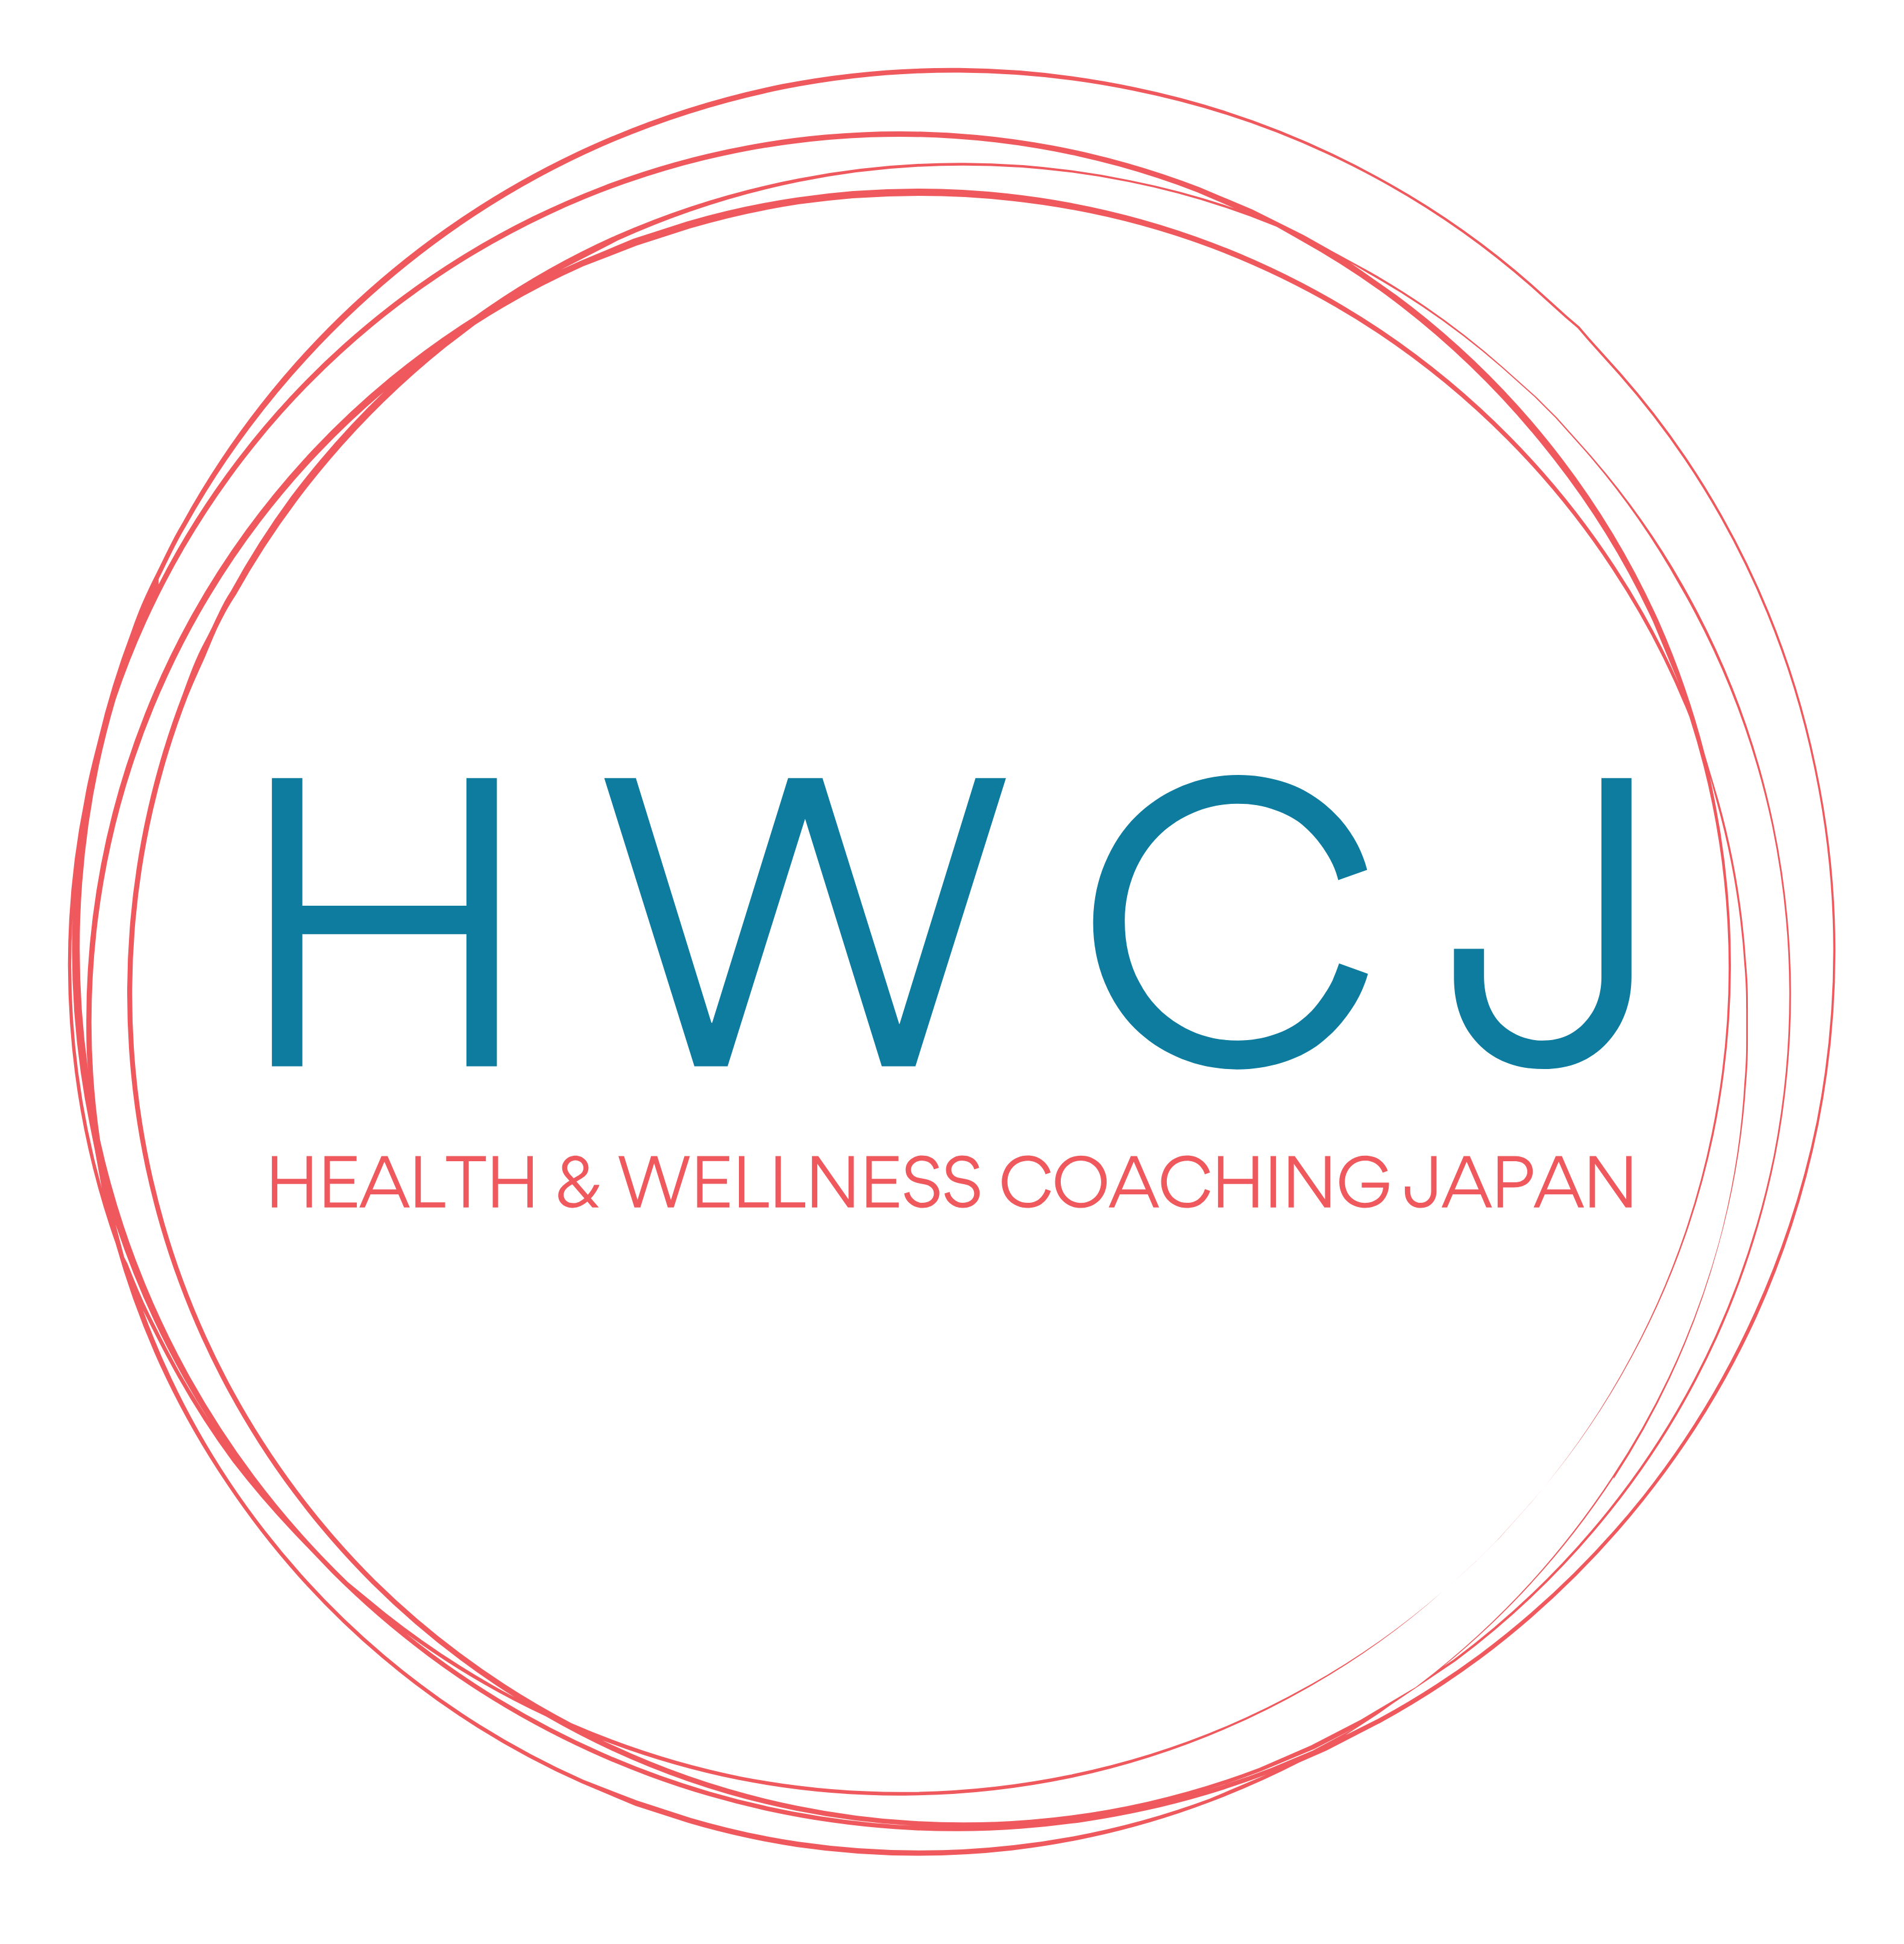 Health & Wellness Coaching Japan